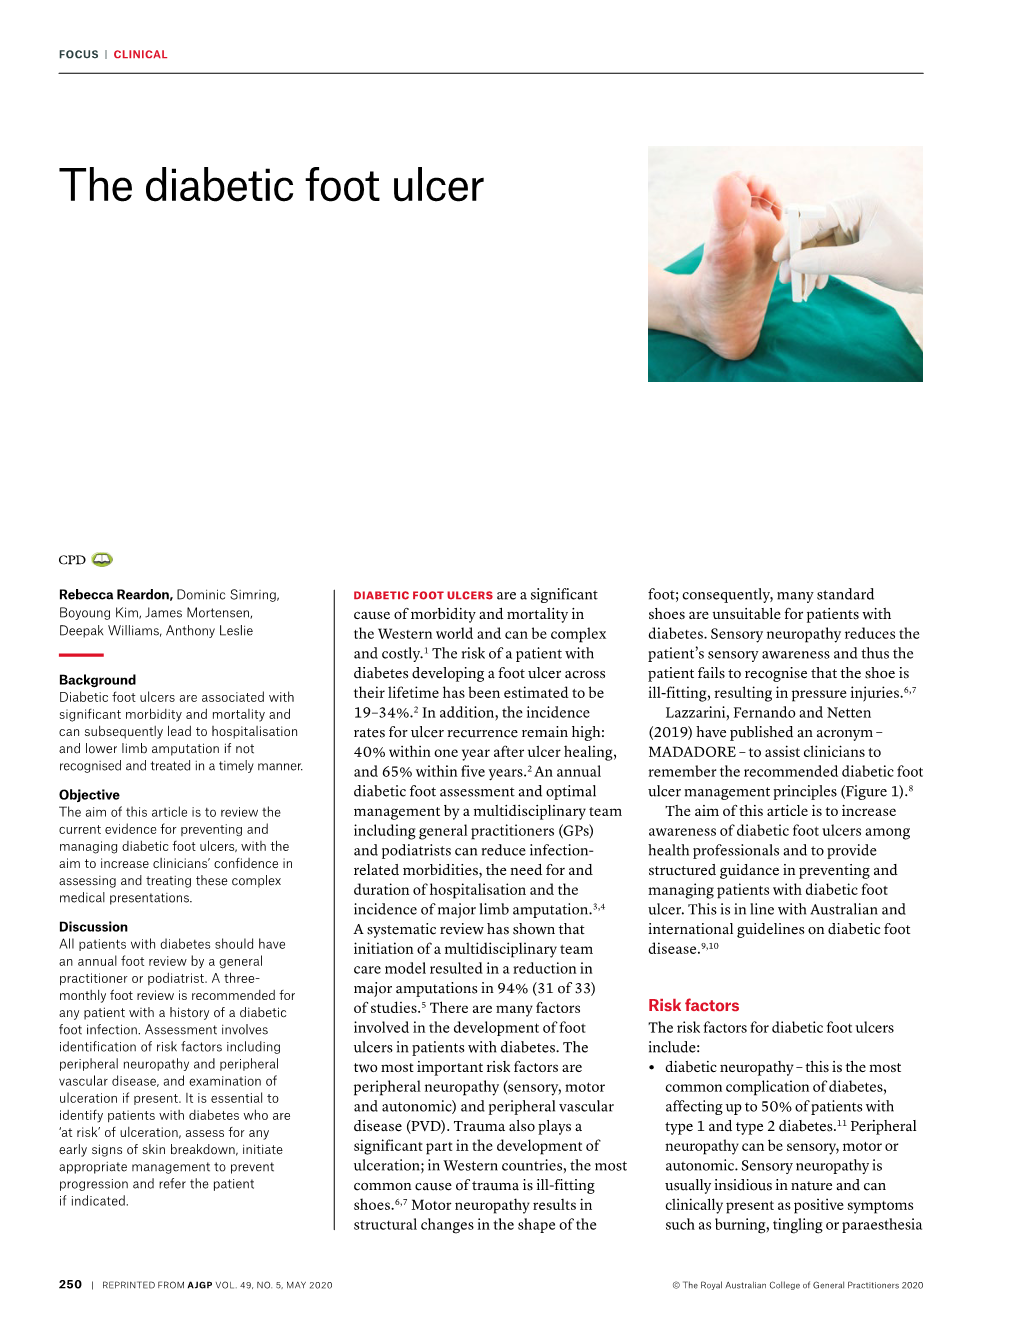 The Diabetic Foot Ulcer